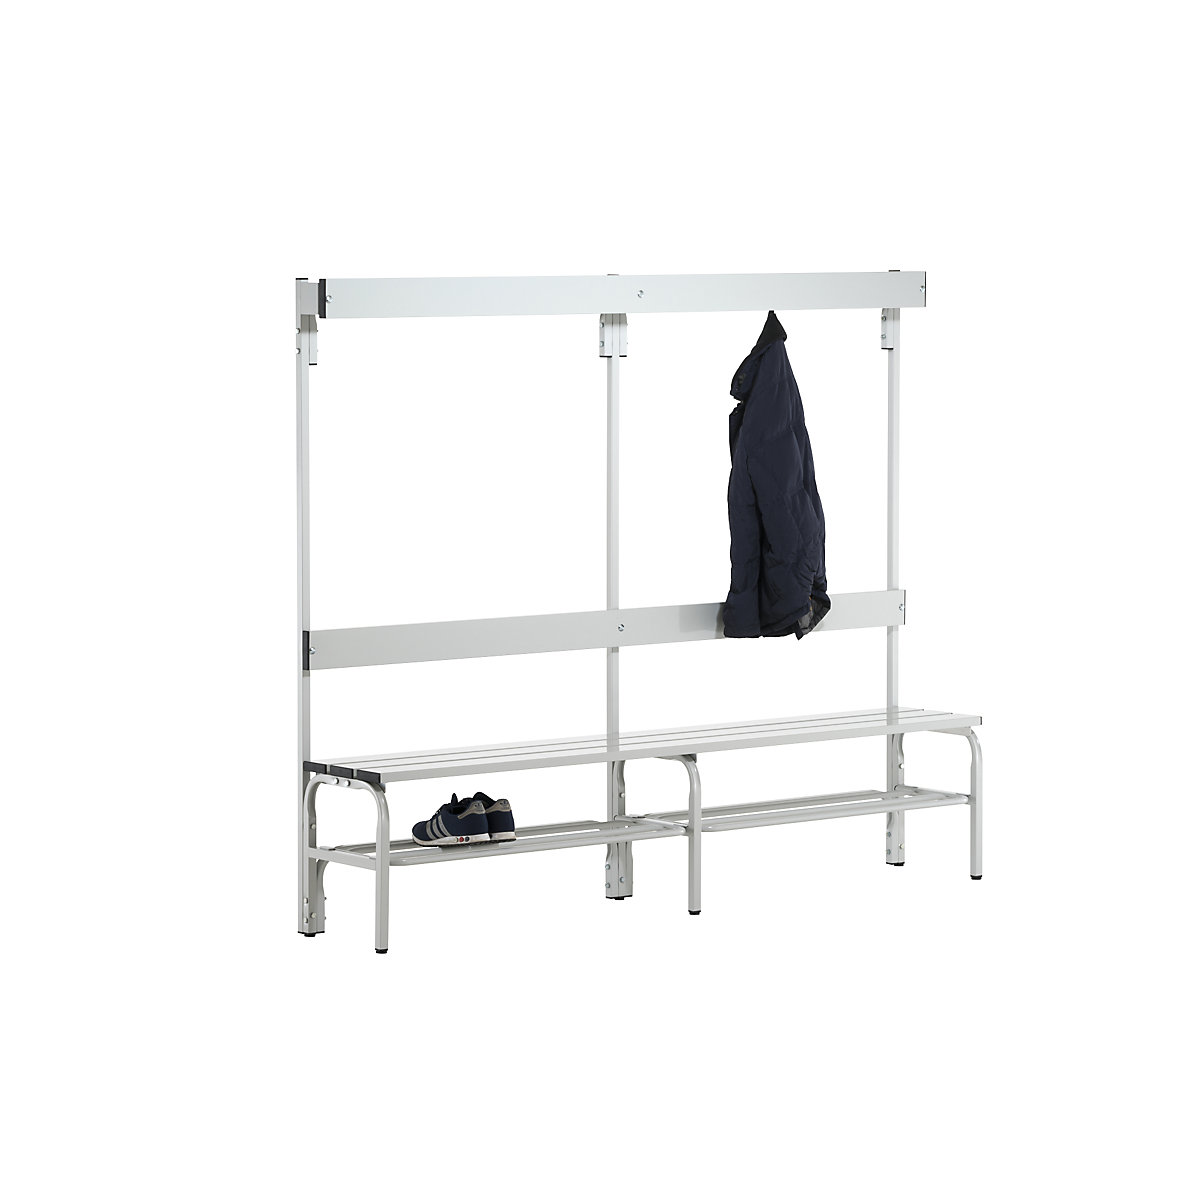 Sypro – Changing room bench with aluminium slats (Product illustration 14)